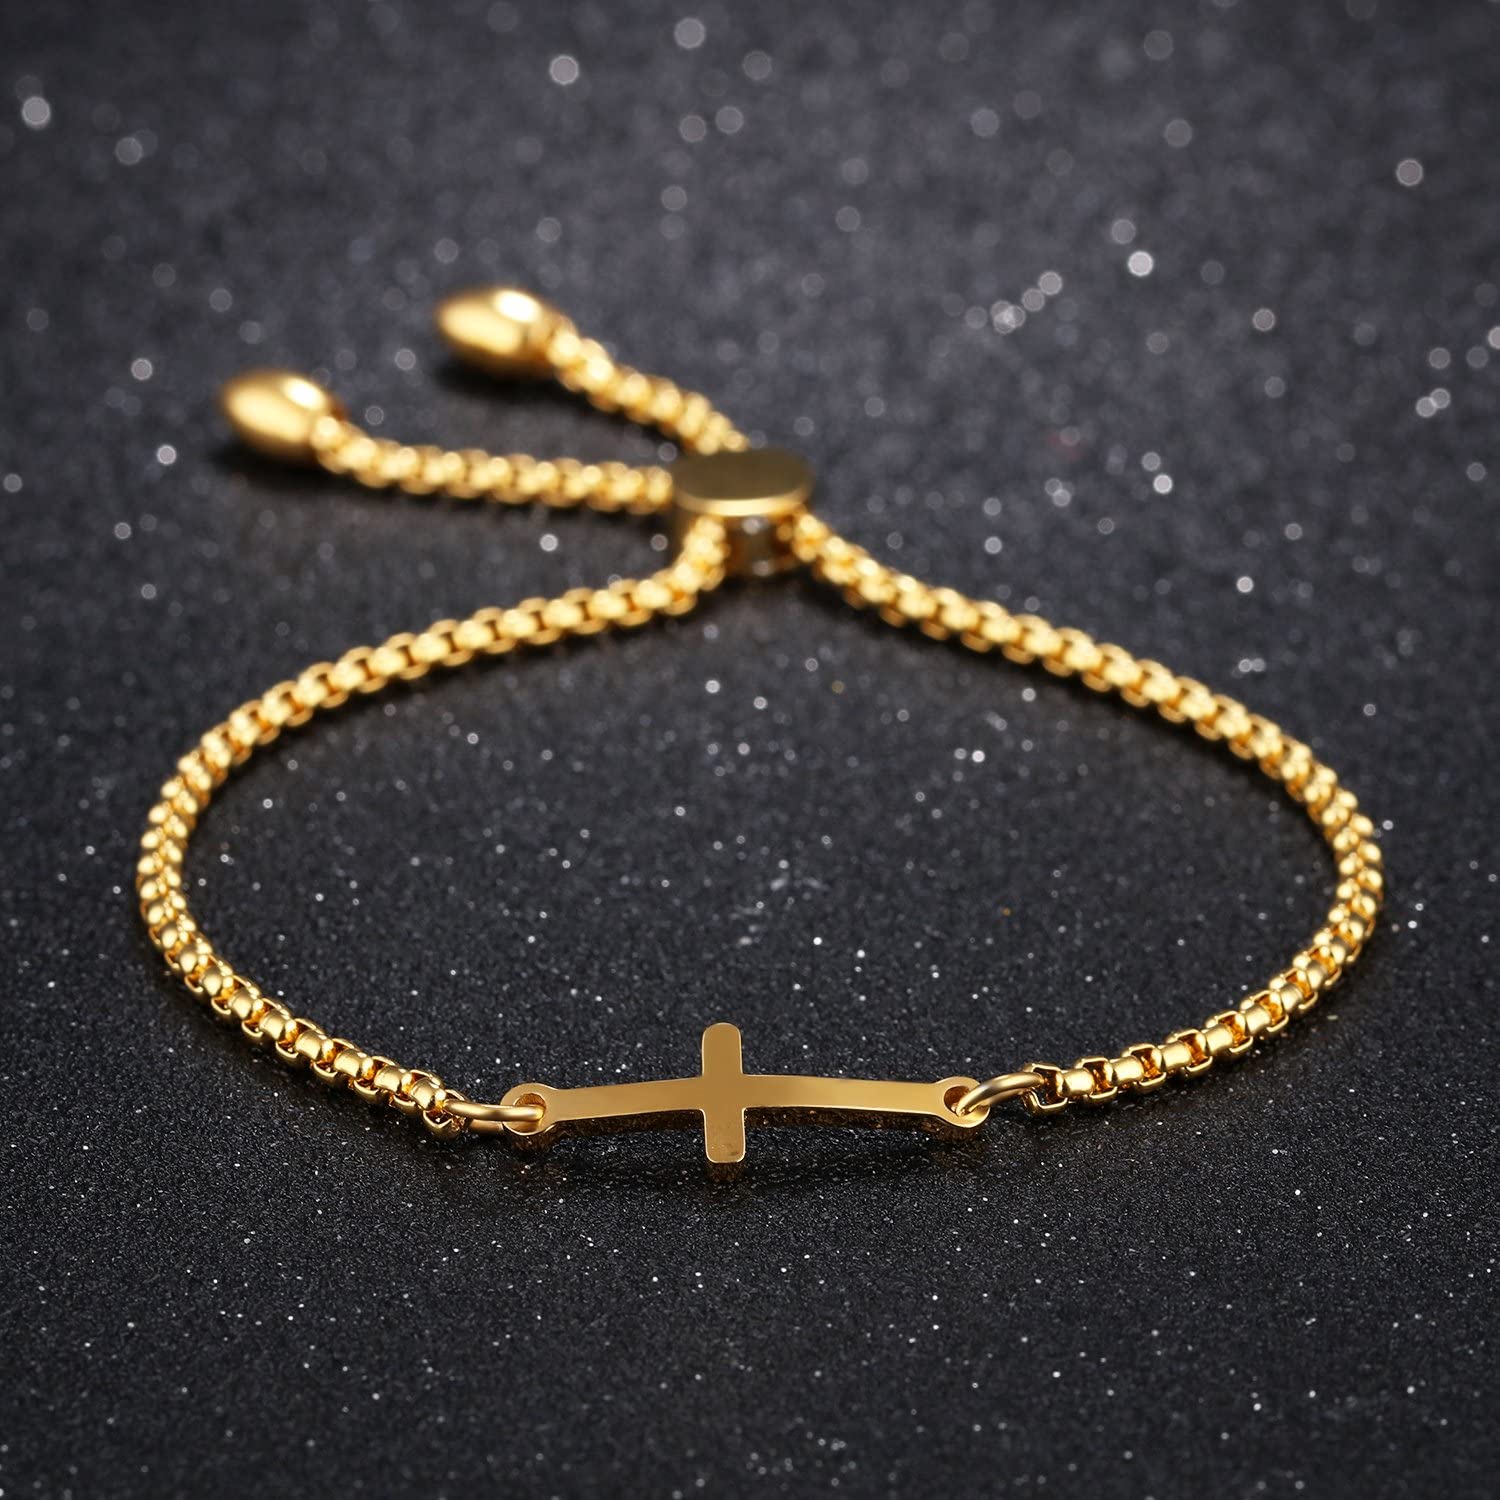 Cocazyw 14K Gold Plated Rose Gold Silver Cross Adjustable Sideways Bracelet for Women Girls,Gold Cross Bracelet Stainless Steel for 